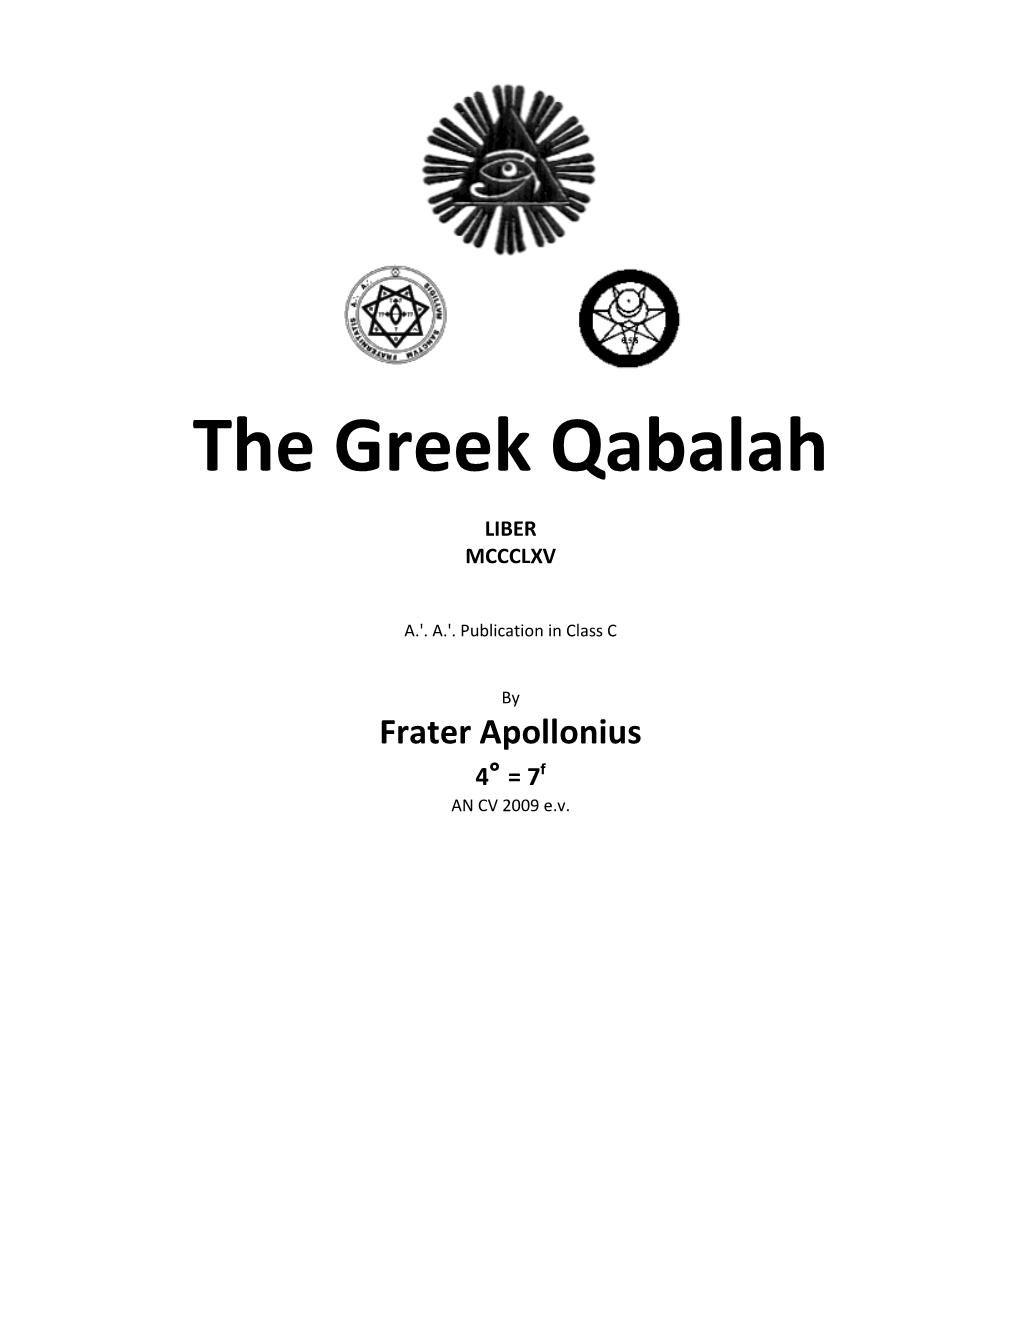 Crowley's Greek Qabalah From